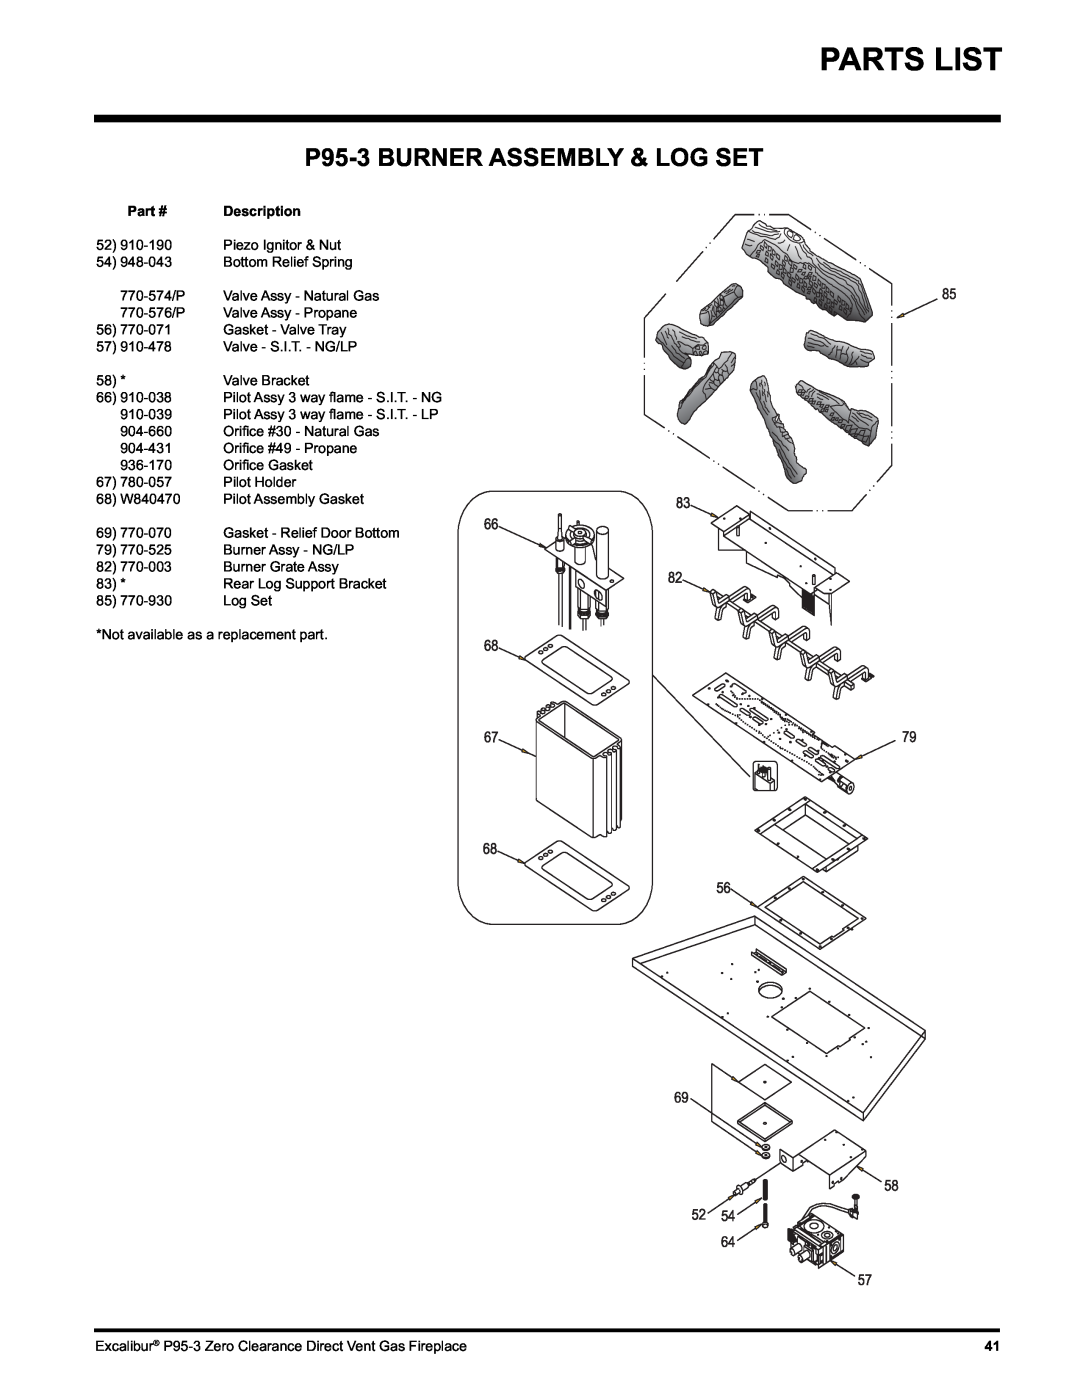 Excalibur electronic P95-LP3, P95-NG3 installation manual Parts List, P95-3BURNER ASSEMBLY & LOG SET, Description 